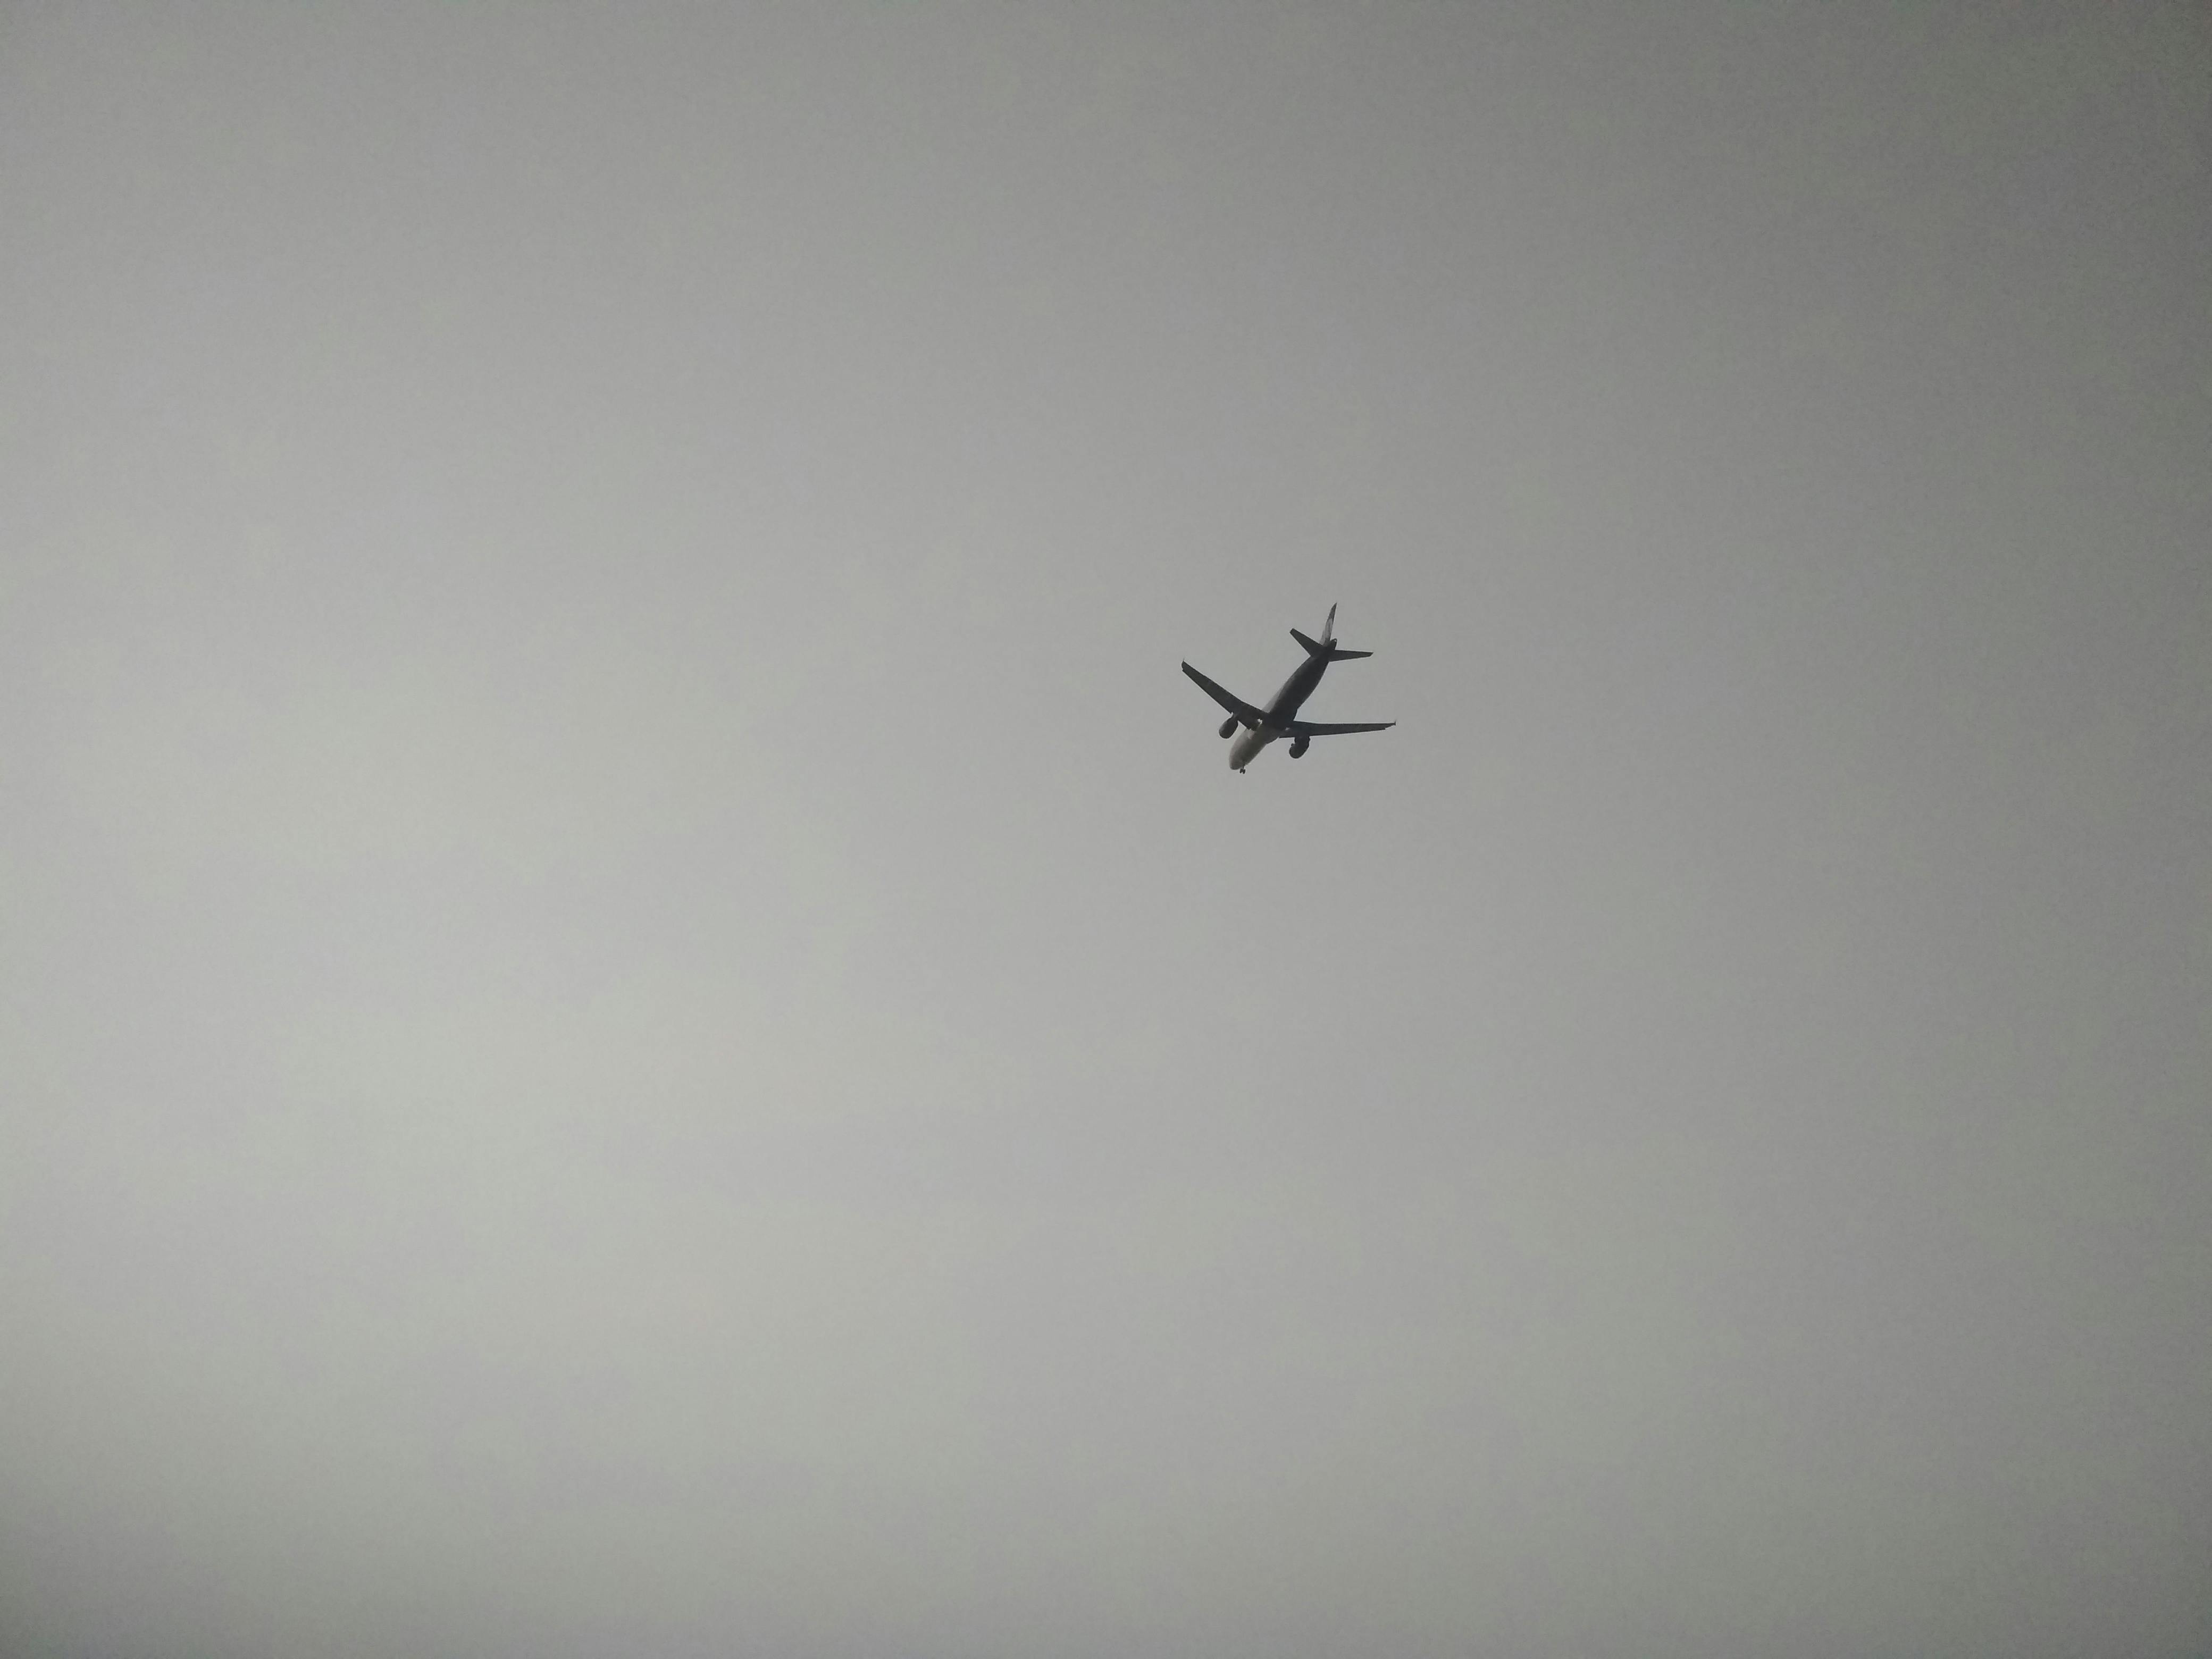 Free stock photo of aeroplane, cloudy sky, flying plane